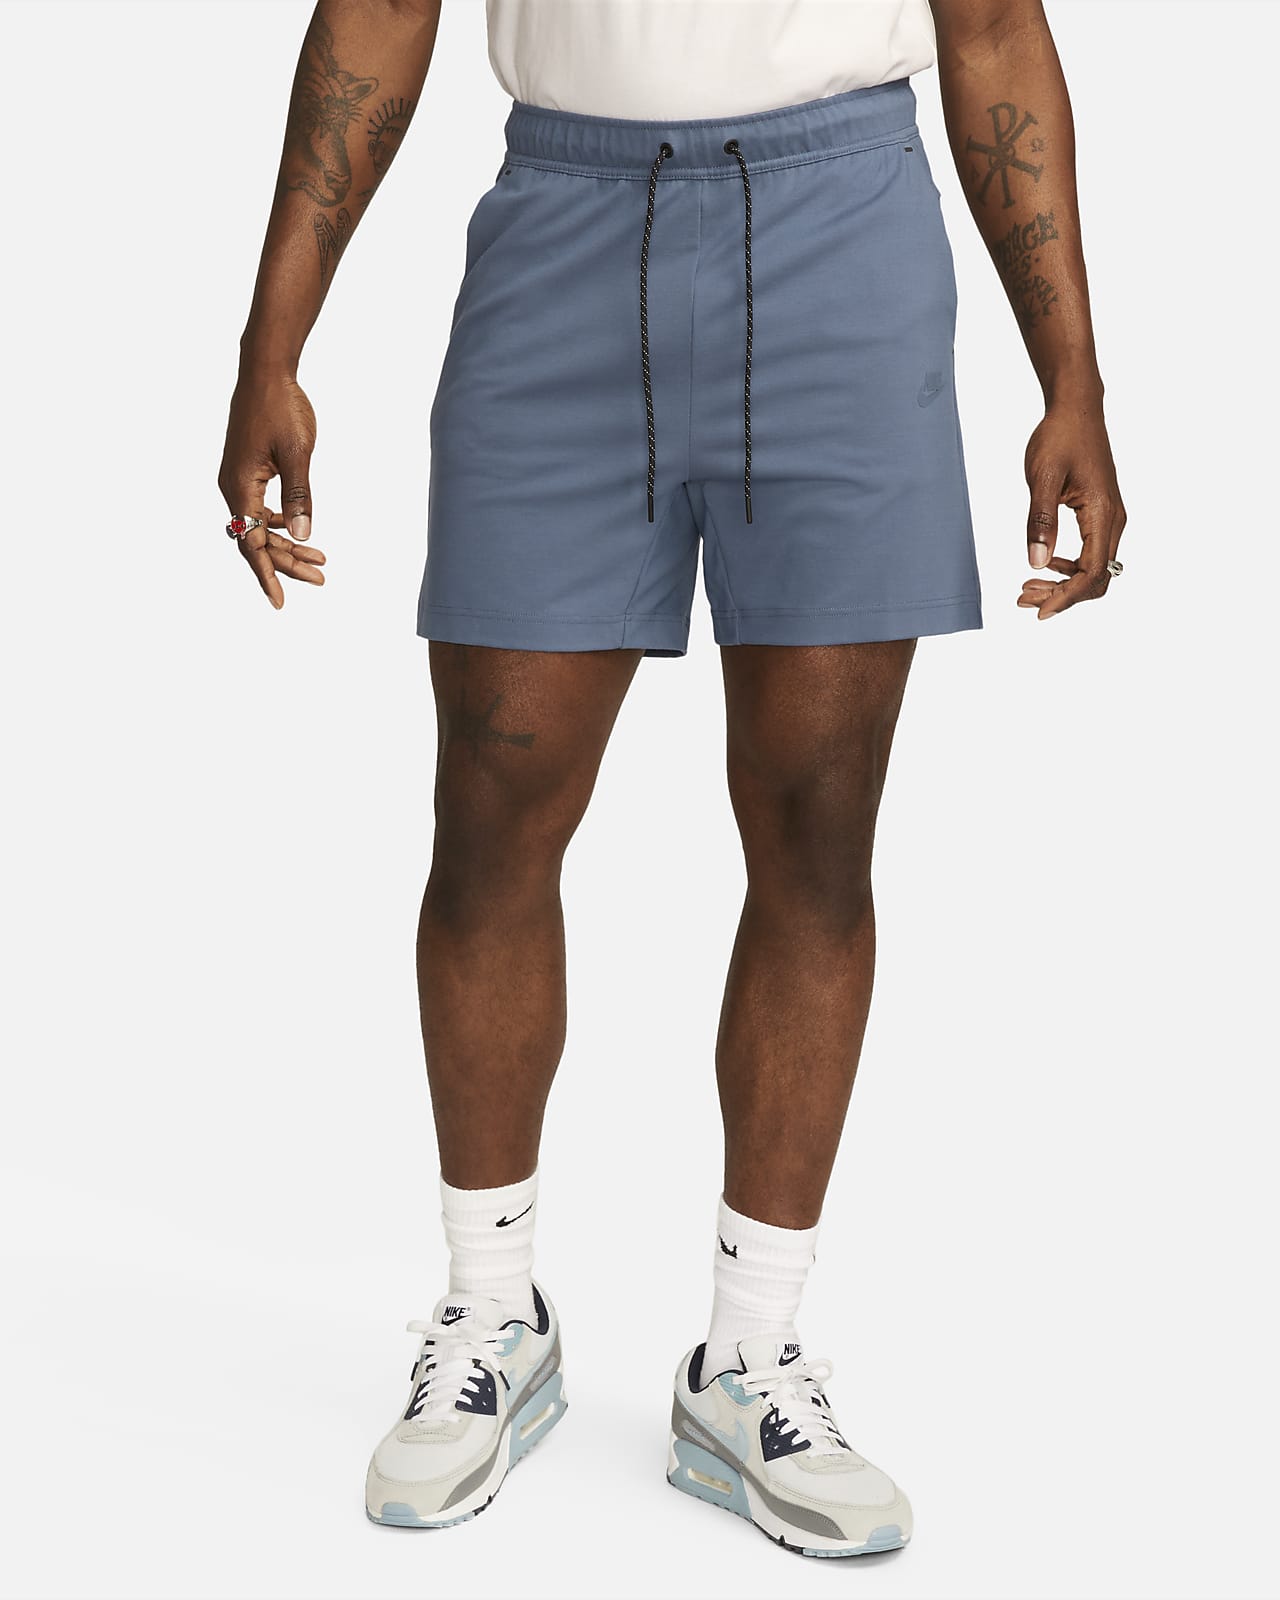 schandaal louter Wakker worden Nike Sportswear Tech Fleece Lightweight herenshorts. Nike NL